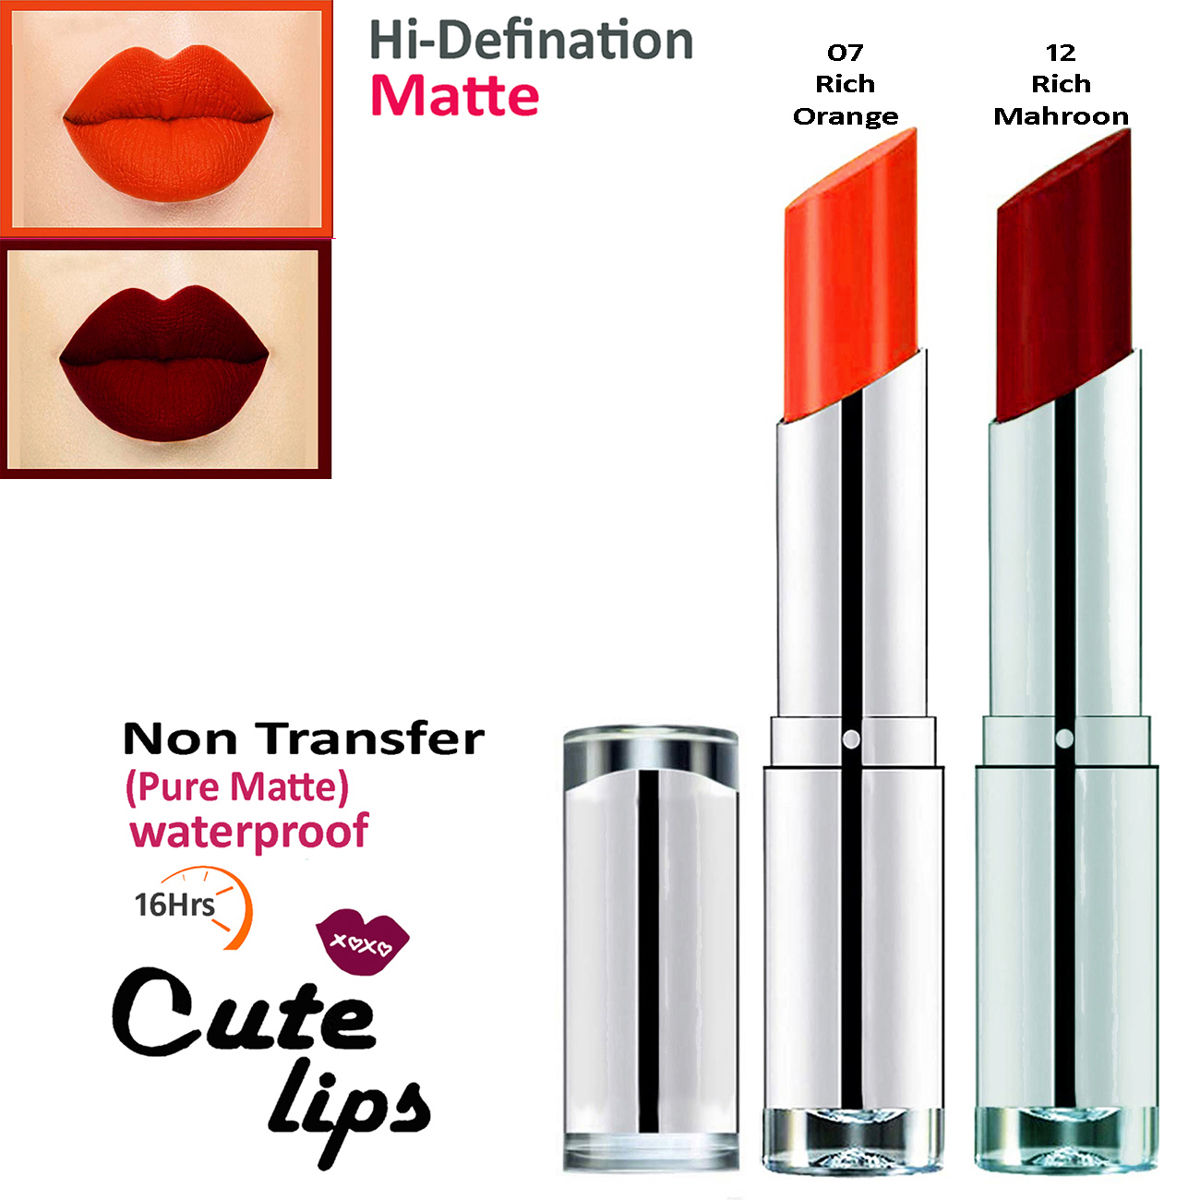 bq BLAQUE Cute Lips Non Transfer Matte Lipstick 2.4 gm each - 07 ...